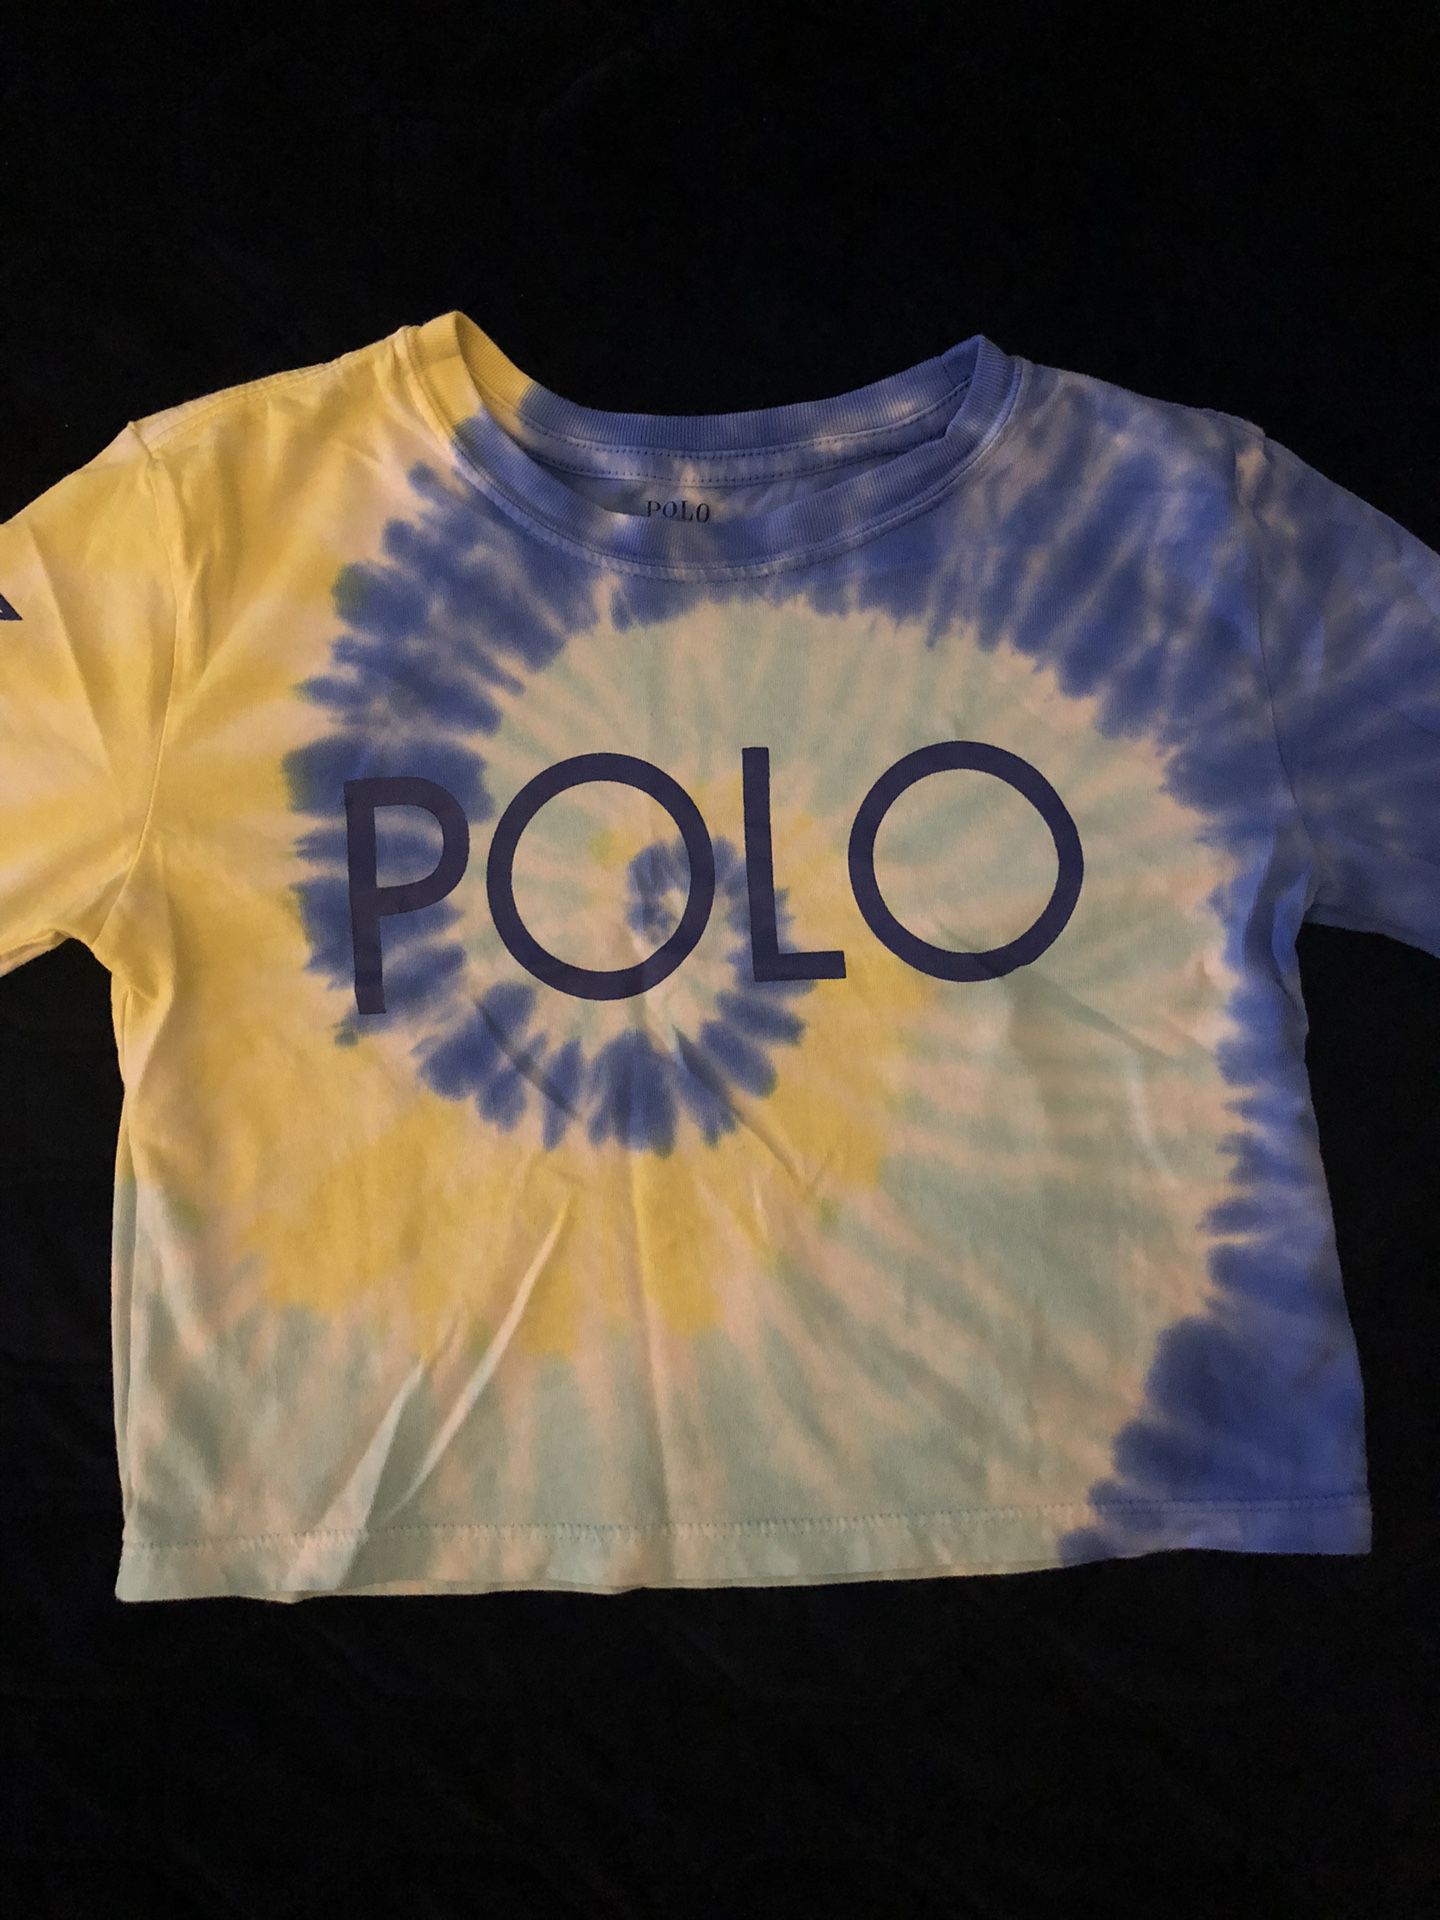 Polo Ralph Lauren Tie Dye Long Sleeved Girls Shirt Size 5T